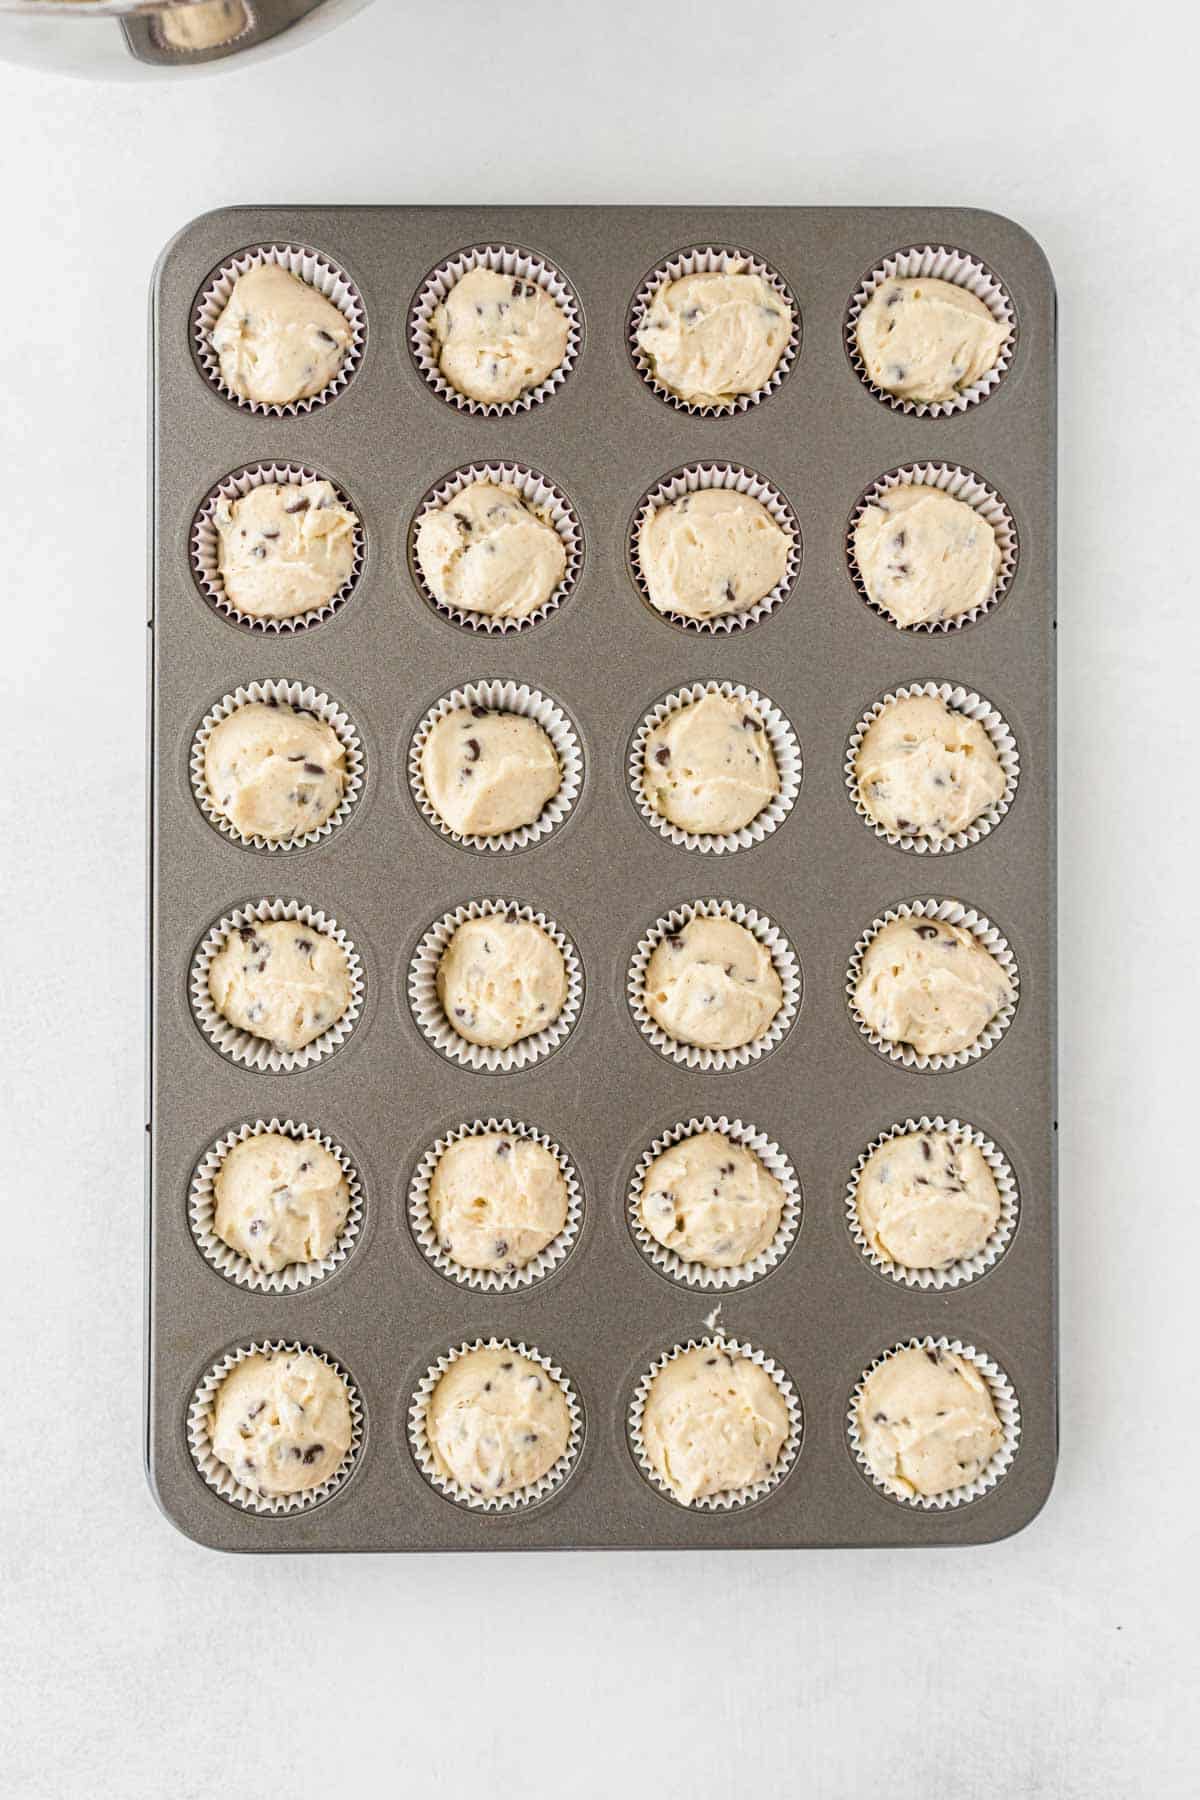 Chocolate chip muffins in a muffin tin.